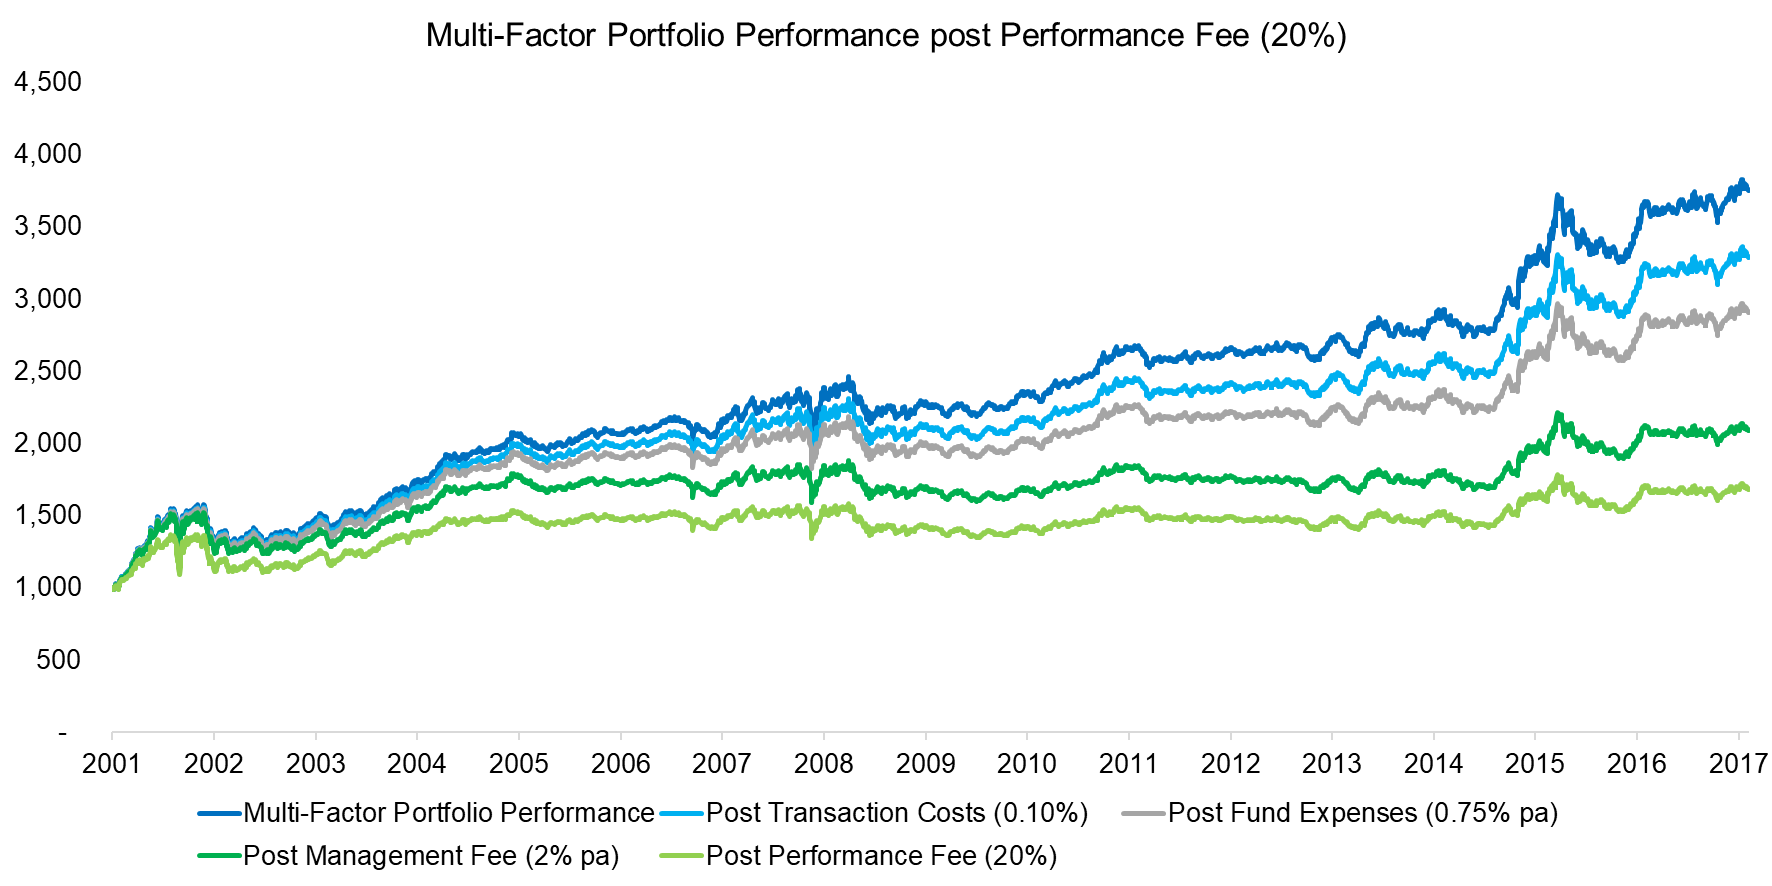 Factor Performance post Performance Fee (20%)